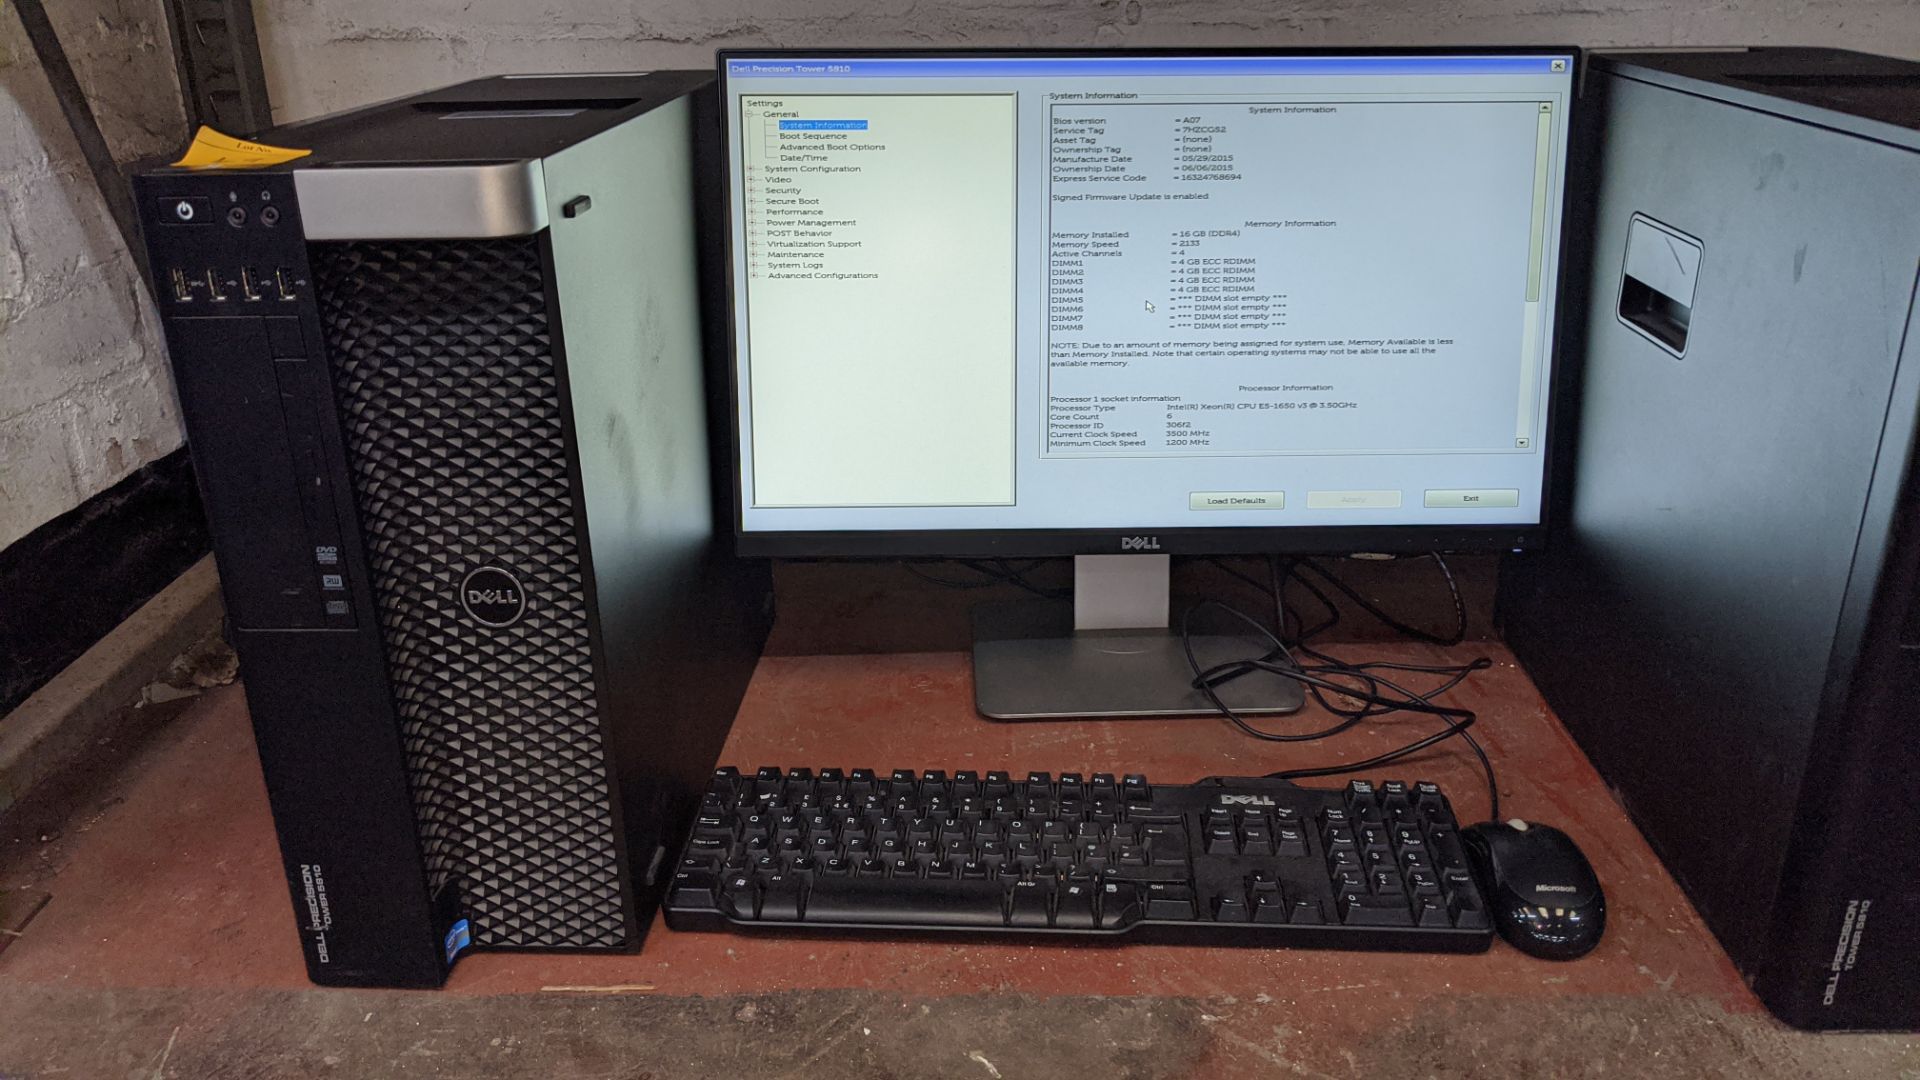 Dell Precision tower 5810 computer with Intel Xeon E5-1650 V3 processor, 16Gb RAM, 256Gb SSD etc. in - Image 2 of 5